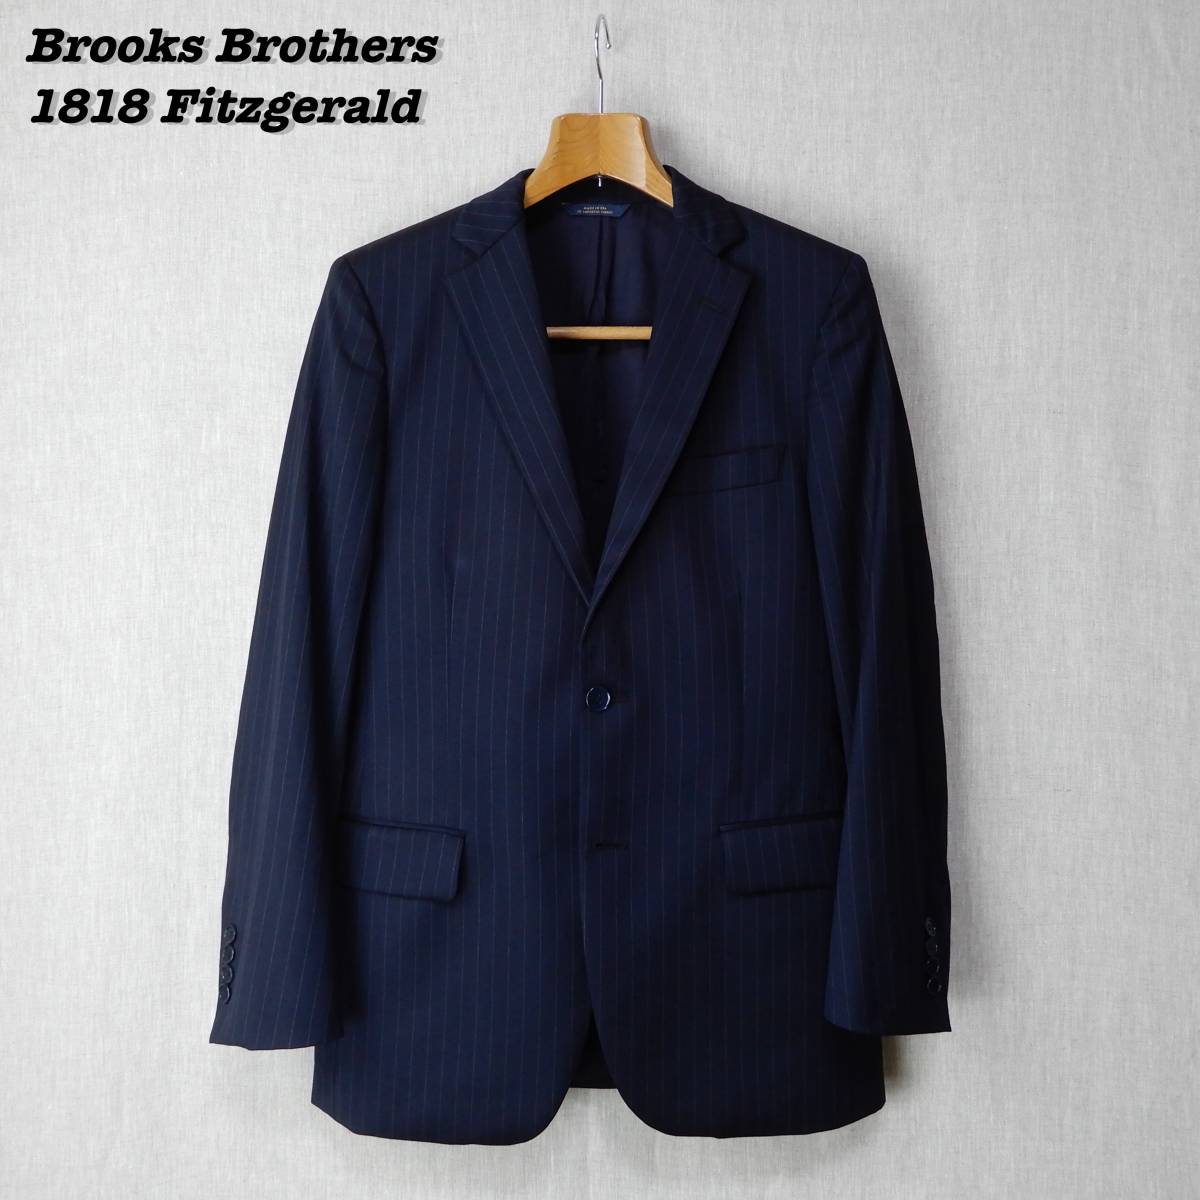 Brooks Brothers 1818 Fitzgerald Jacket 36R Made in USA ブルックスブラザーズ フィッツジェラルド テーラードジャケット アメリカ製